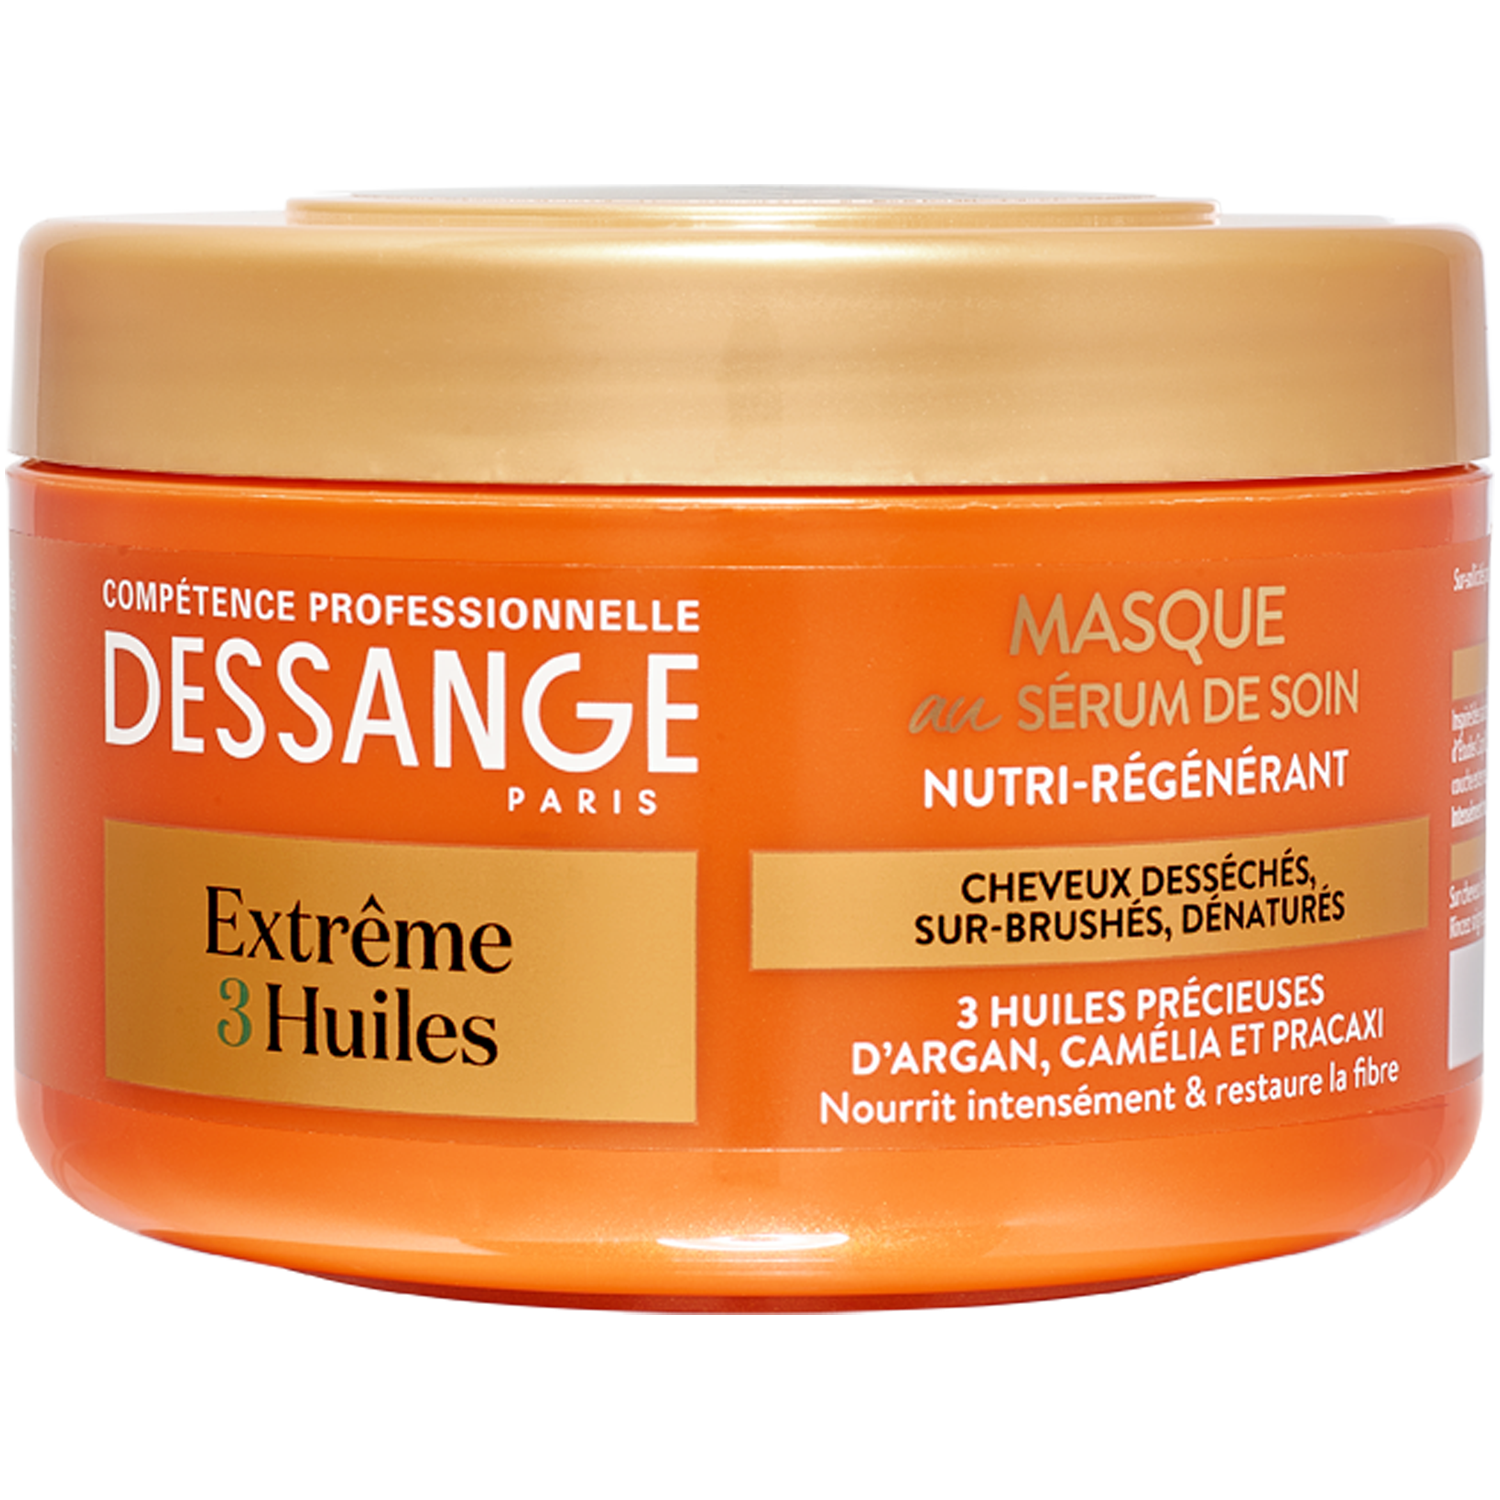 цена Dessange Professional Hair Luxury Extreme 3 Huiles регенерирующая маска для волос, 250 мл